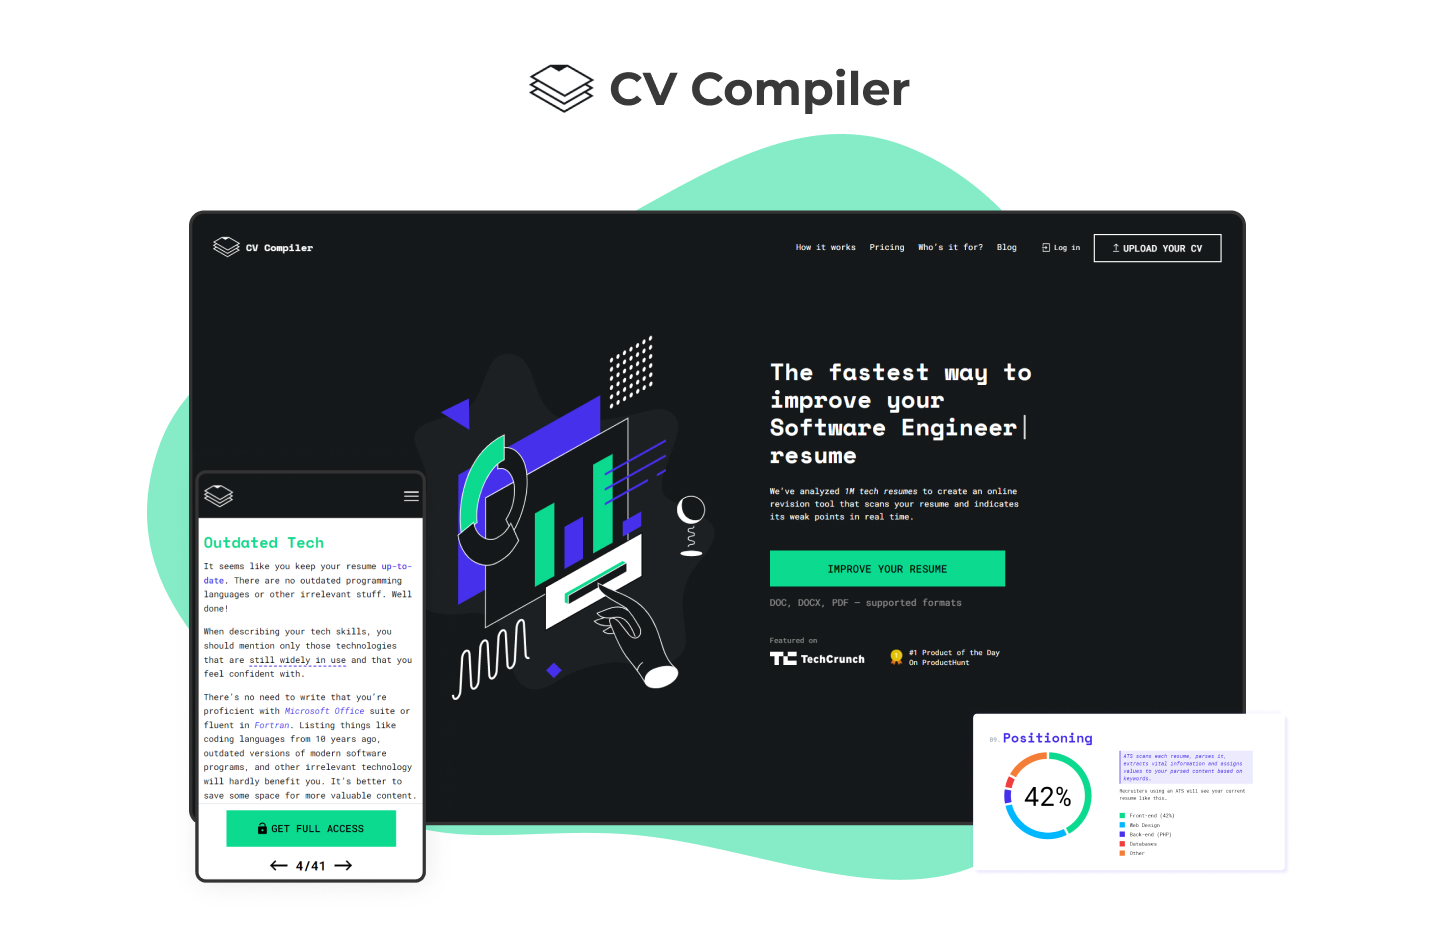 CV Compiler is an ML-based resume parser developed by Flyaps